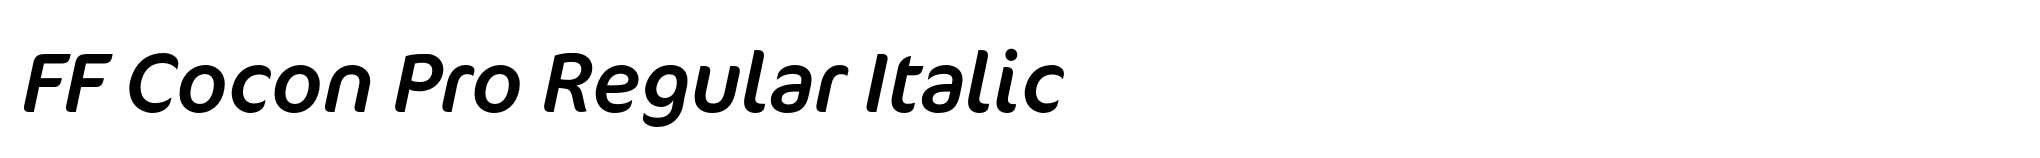 FF Cocon Pro Regular Italic image